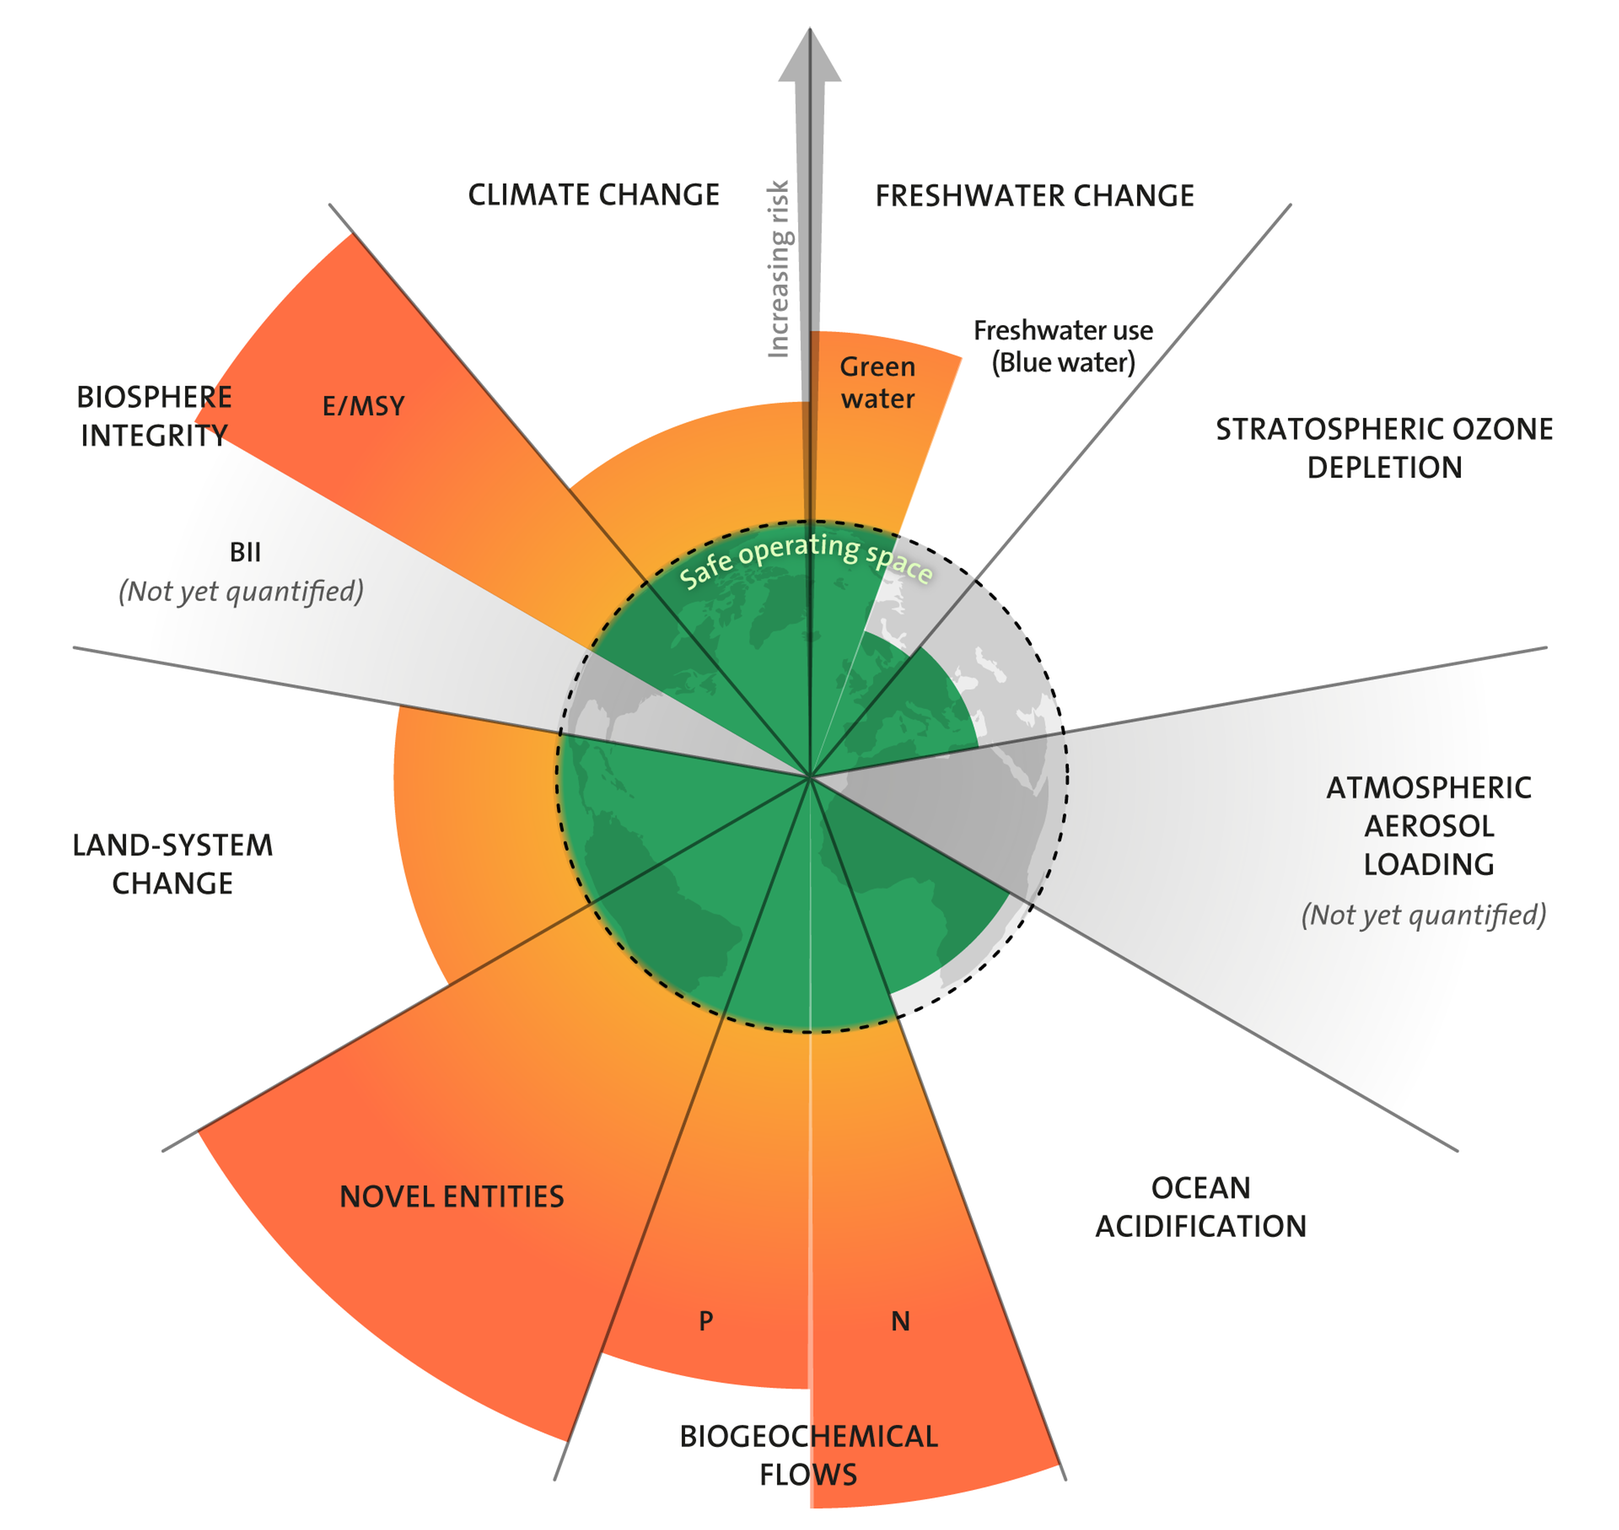 An illustration of the planetary boundaries framework